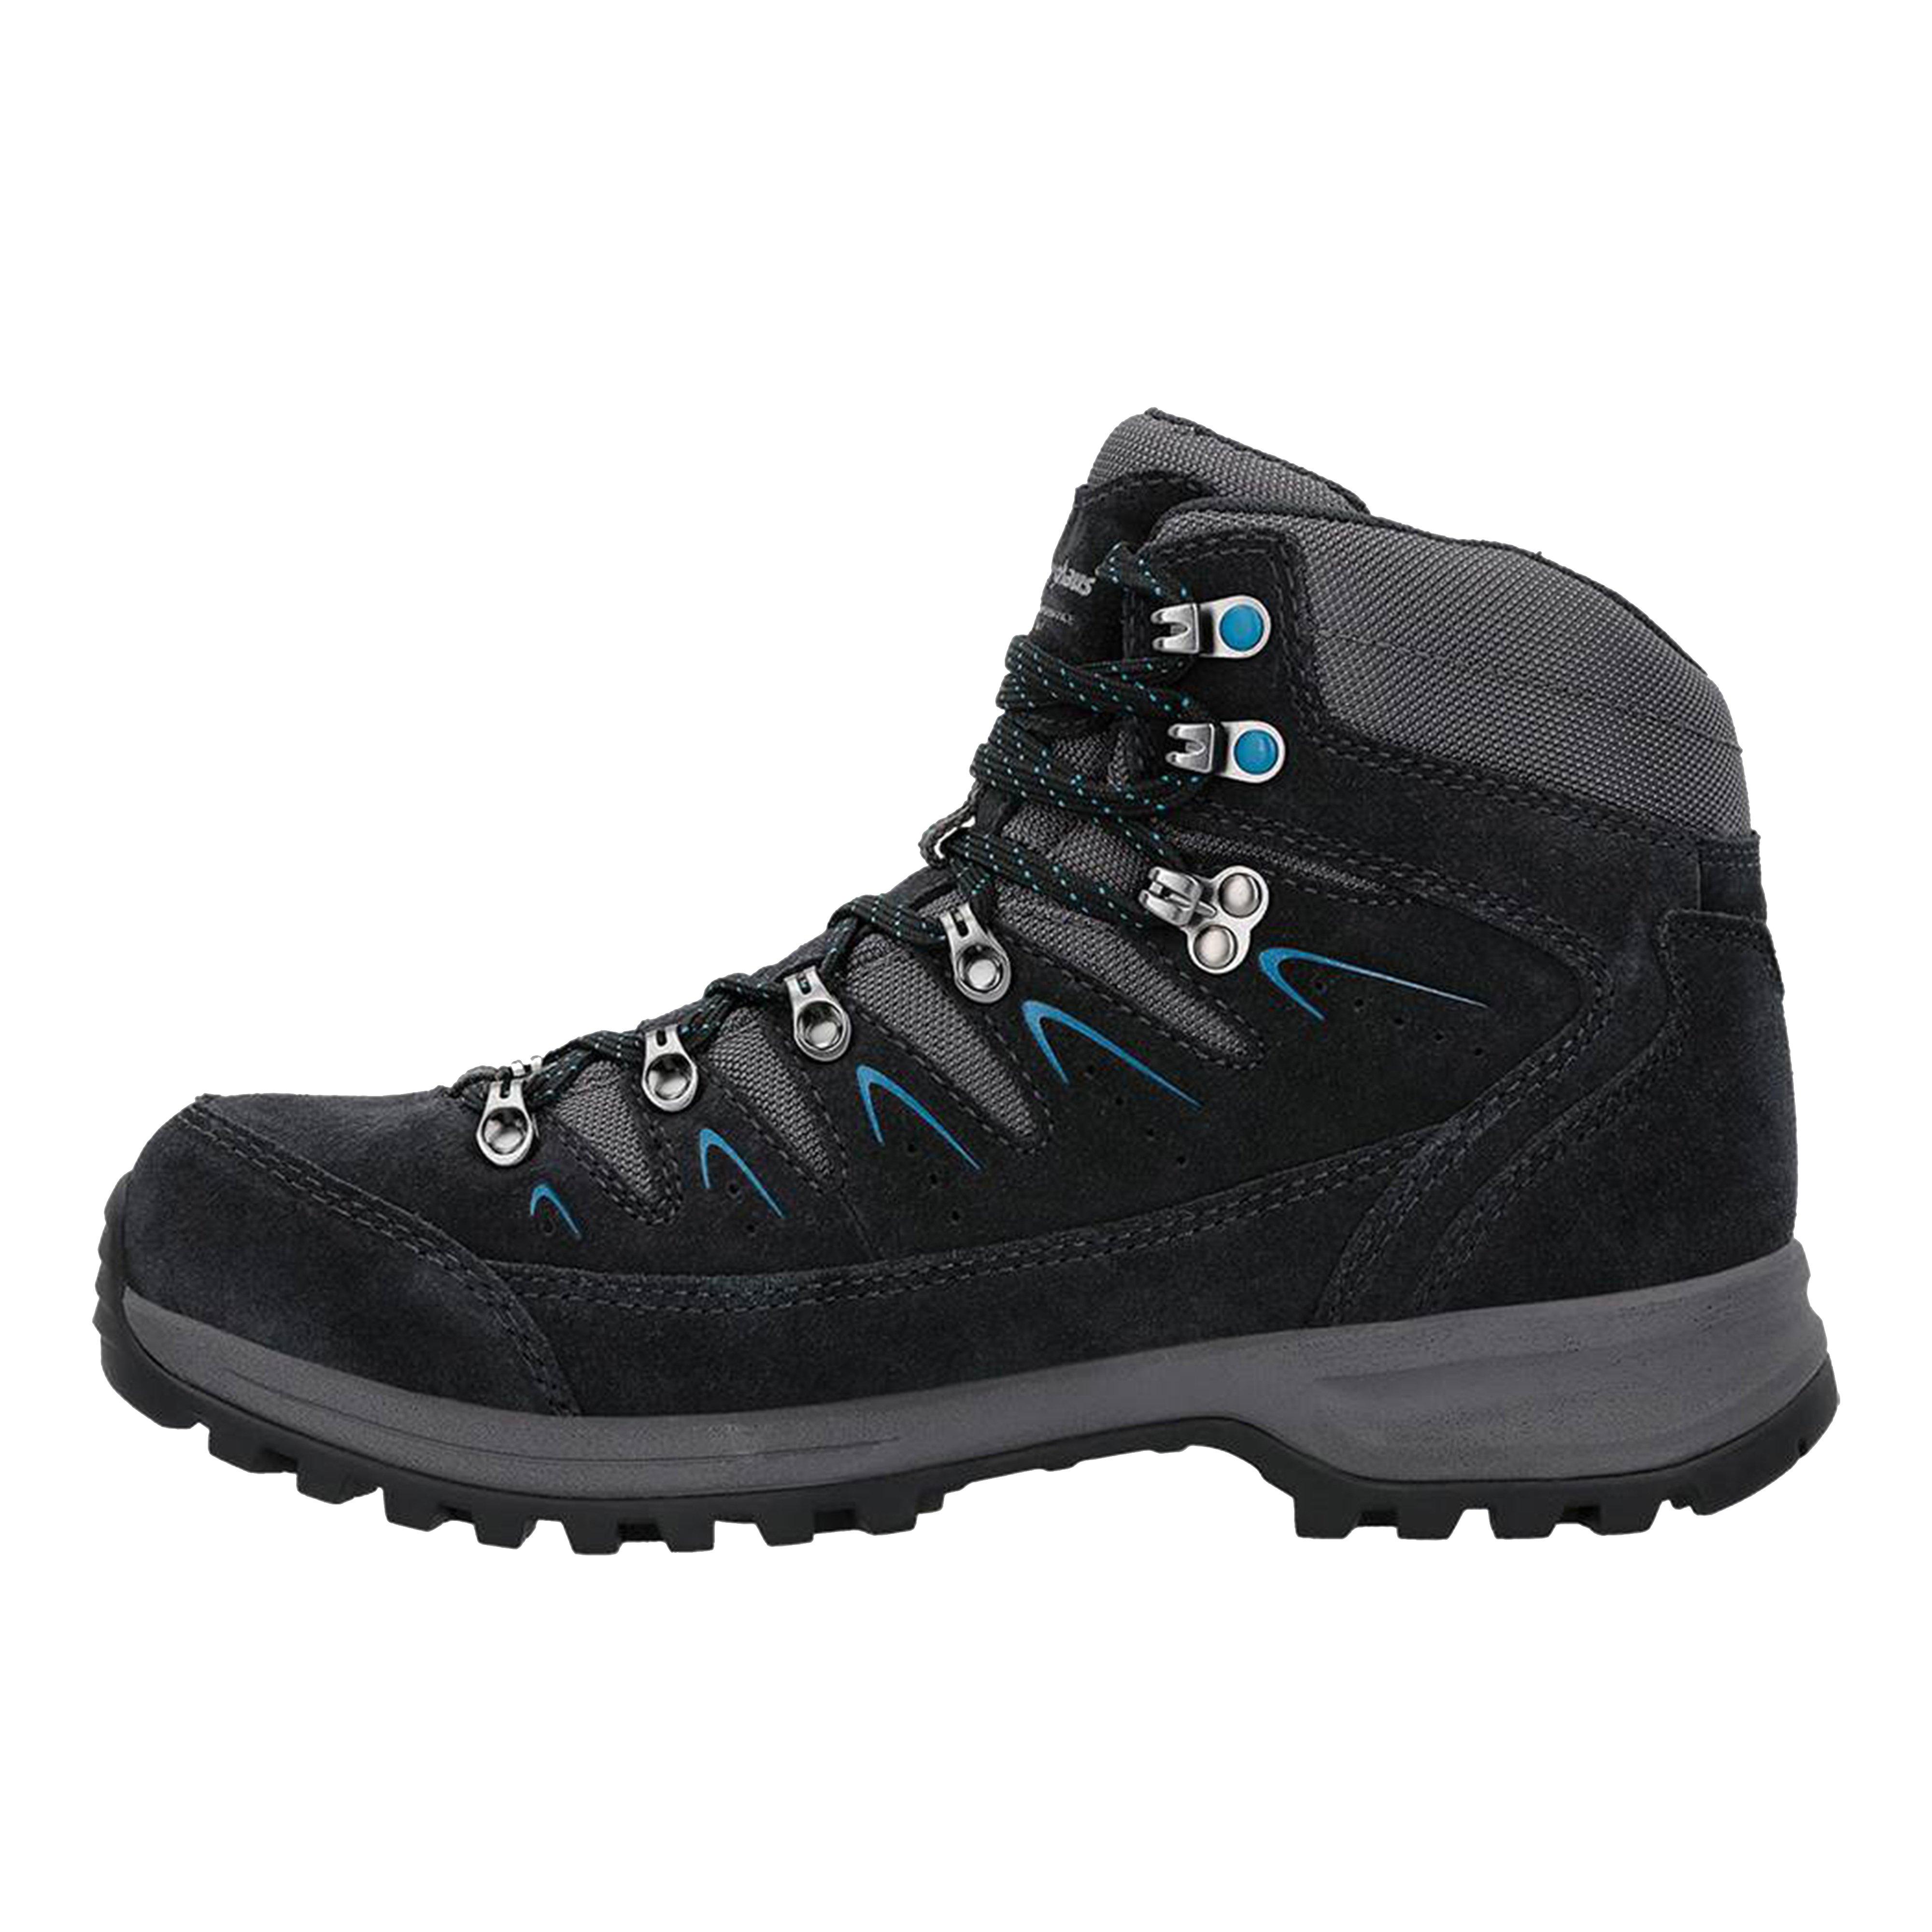 Navy/Grey Berghaus Womens Explorer Trek Gore-Tex Waterproof Walking Boots 7.5 UK 41.5 EU 